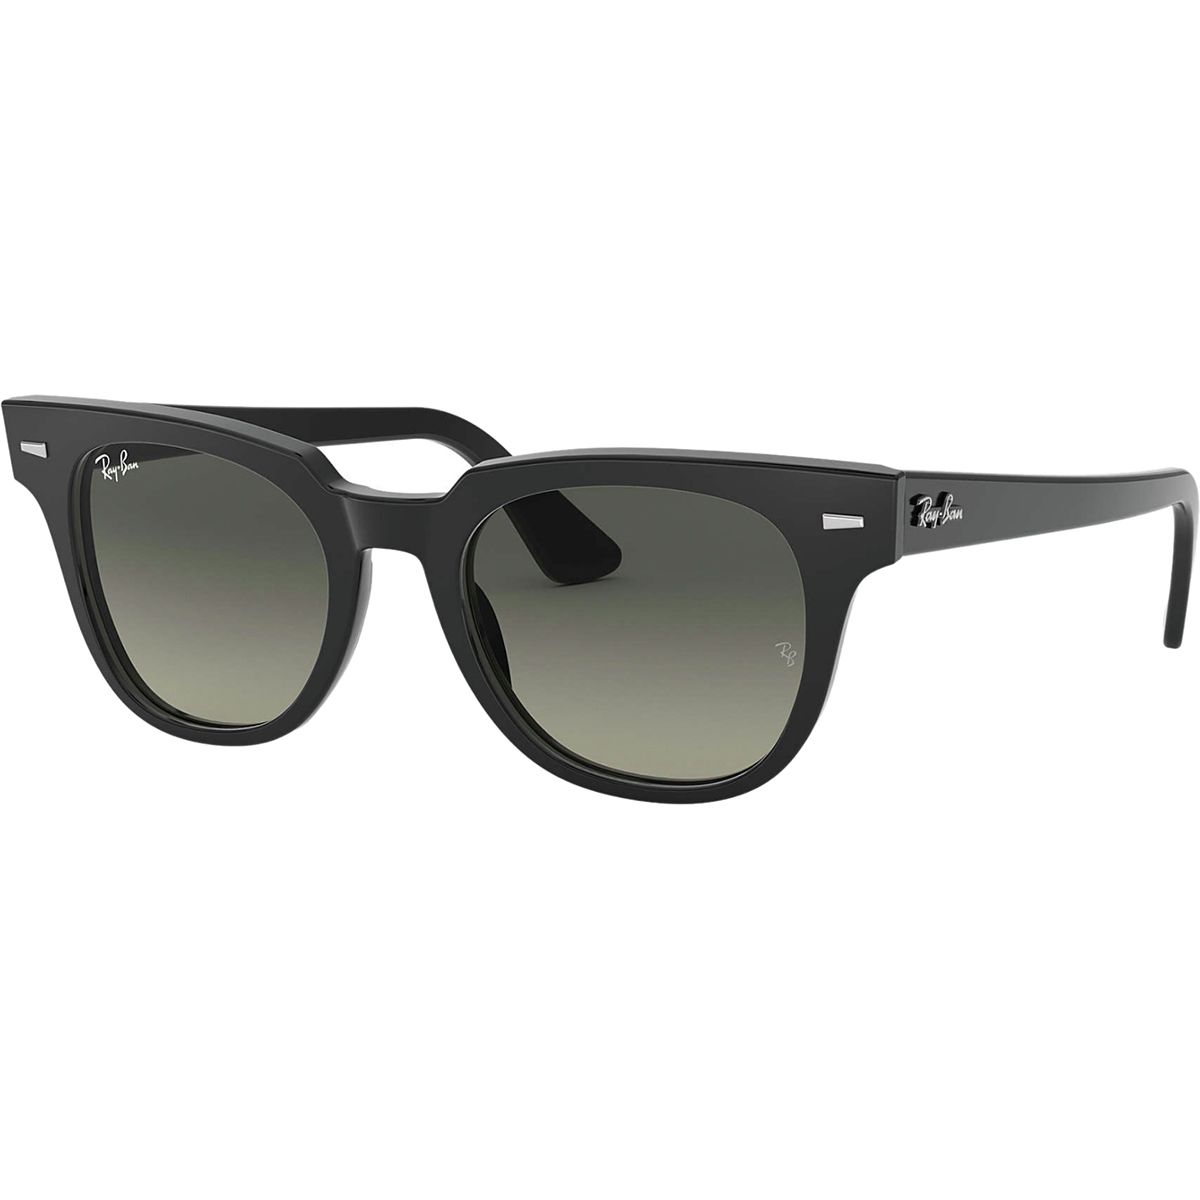 Ray-Ban Meteor Classic Sunglasses